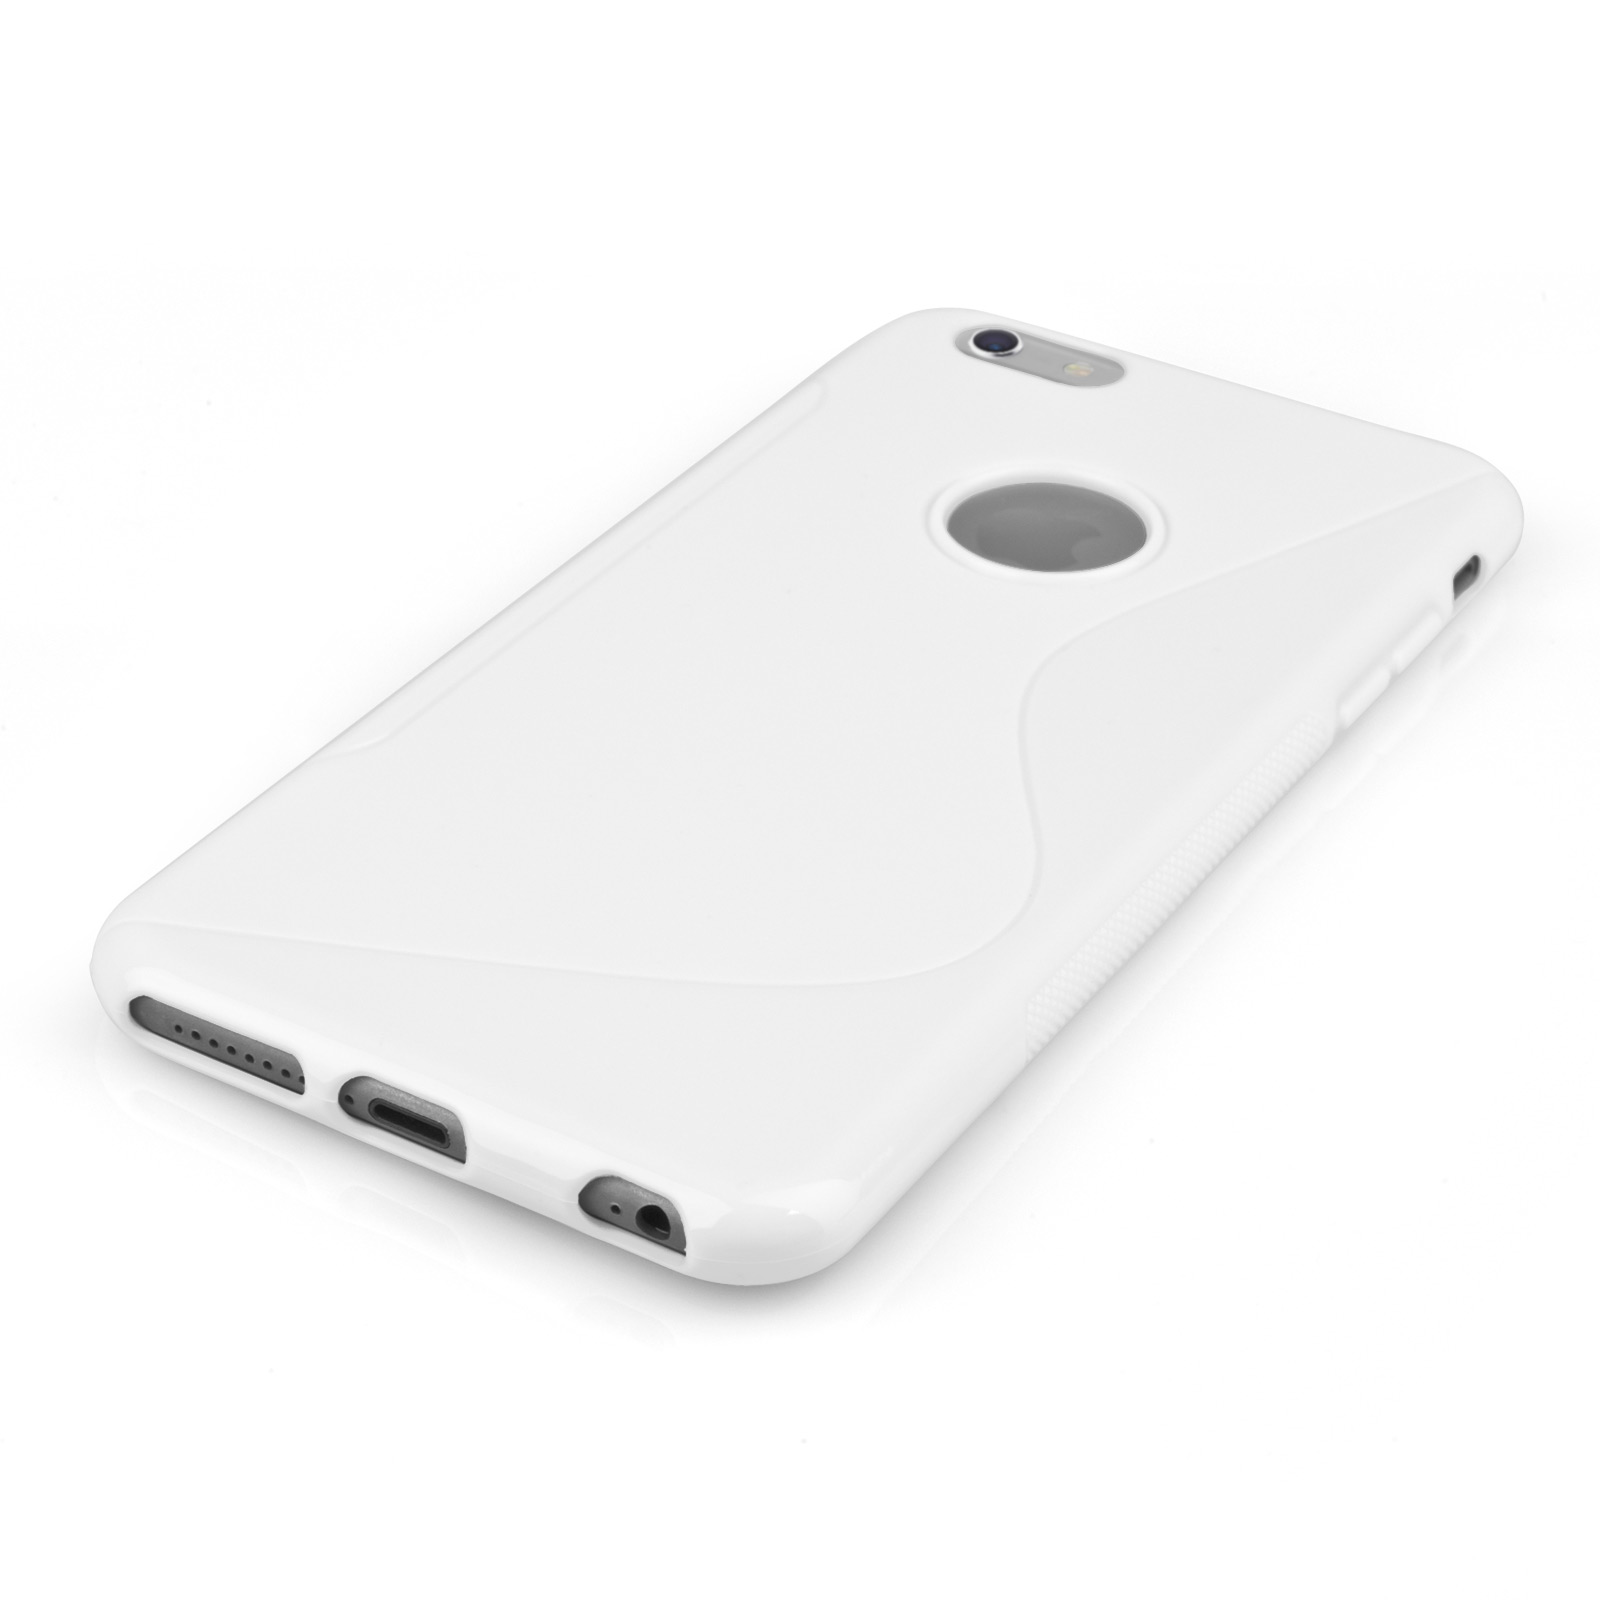 Caseflex iPhone 6 Plus and 6s Plus Silicone Gel S-Line Case - White